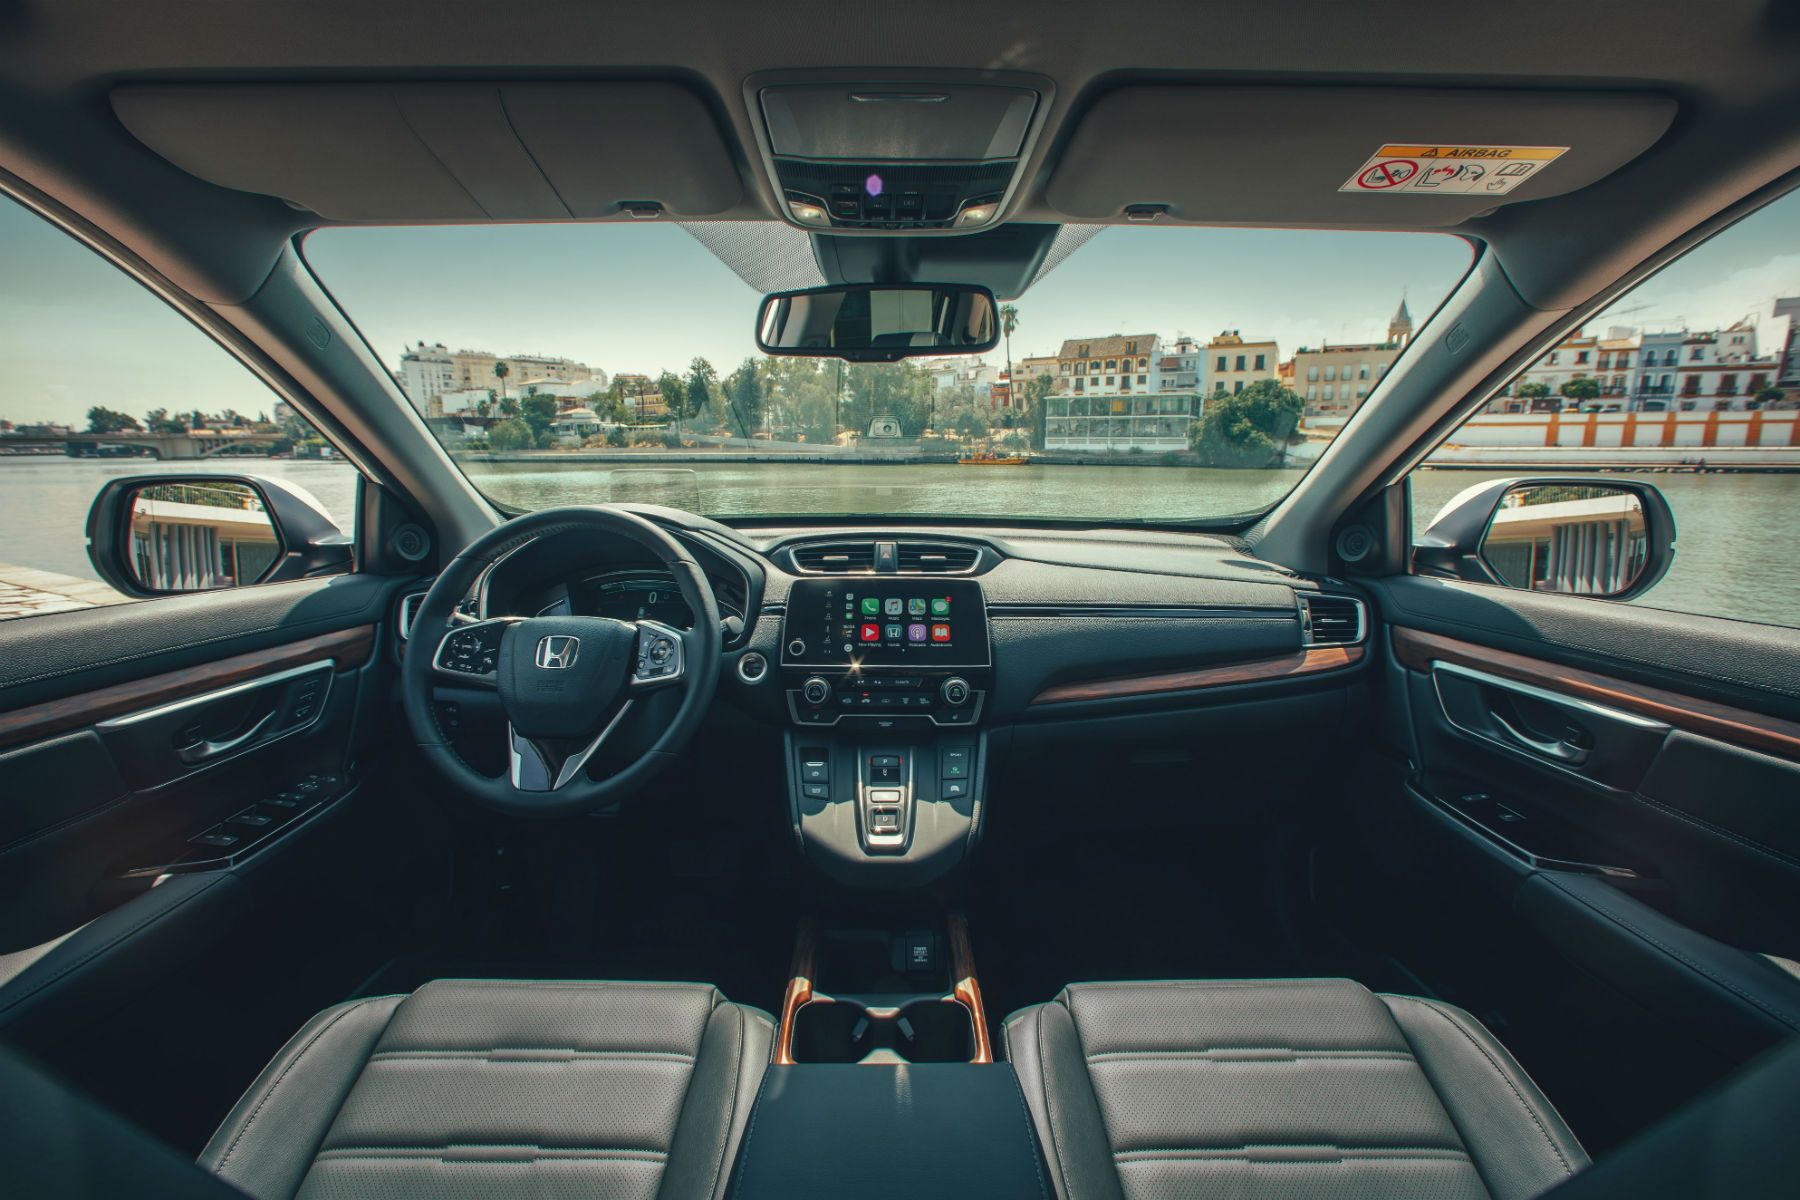 Honda CRV Hybrid Review CarCliq